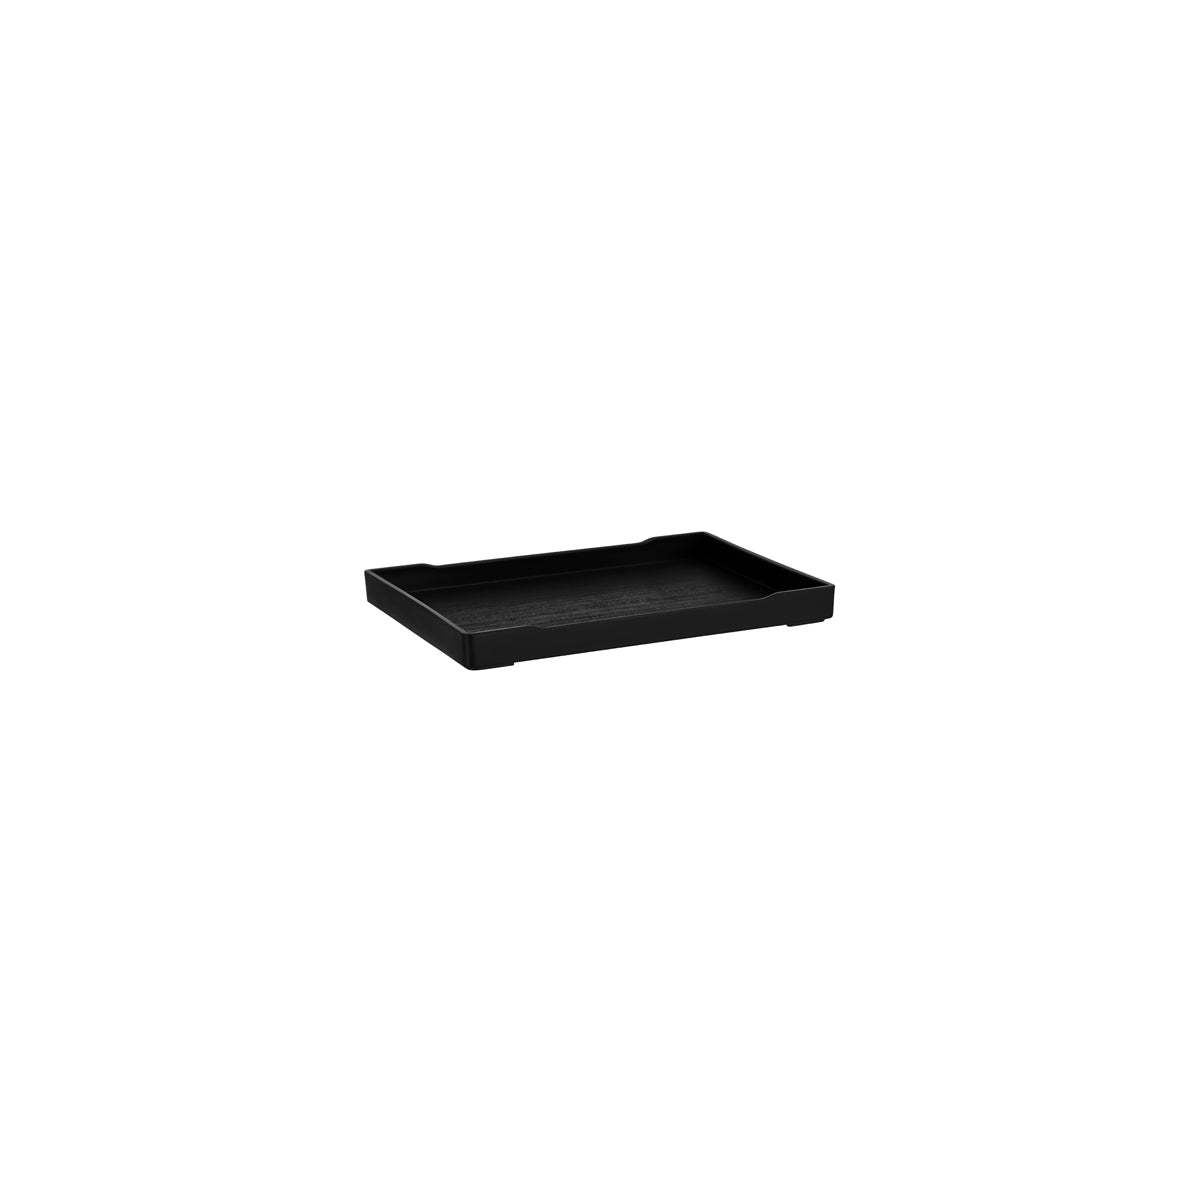 9000-100 Noble & Price Inroom Amenity Tray Black 215x160x20mm Tomkin Australia Hospitality Supplies